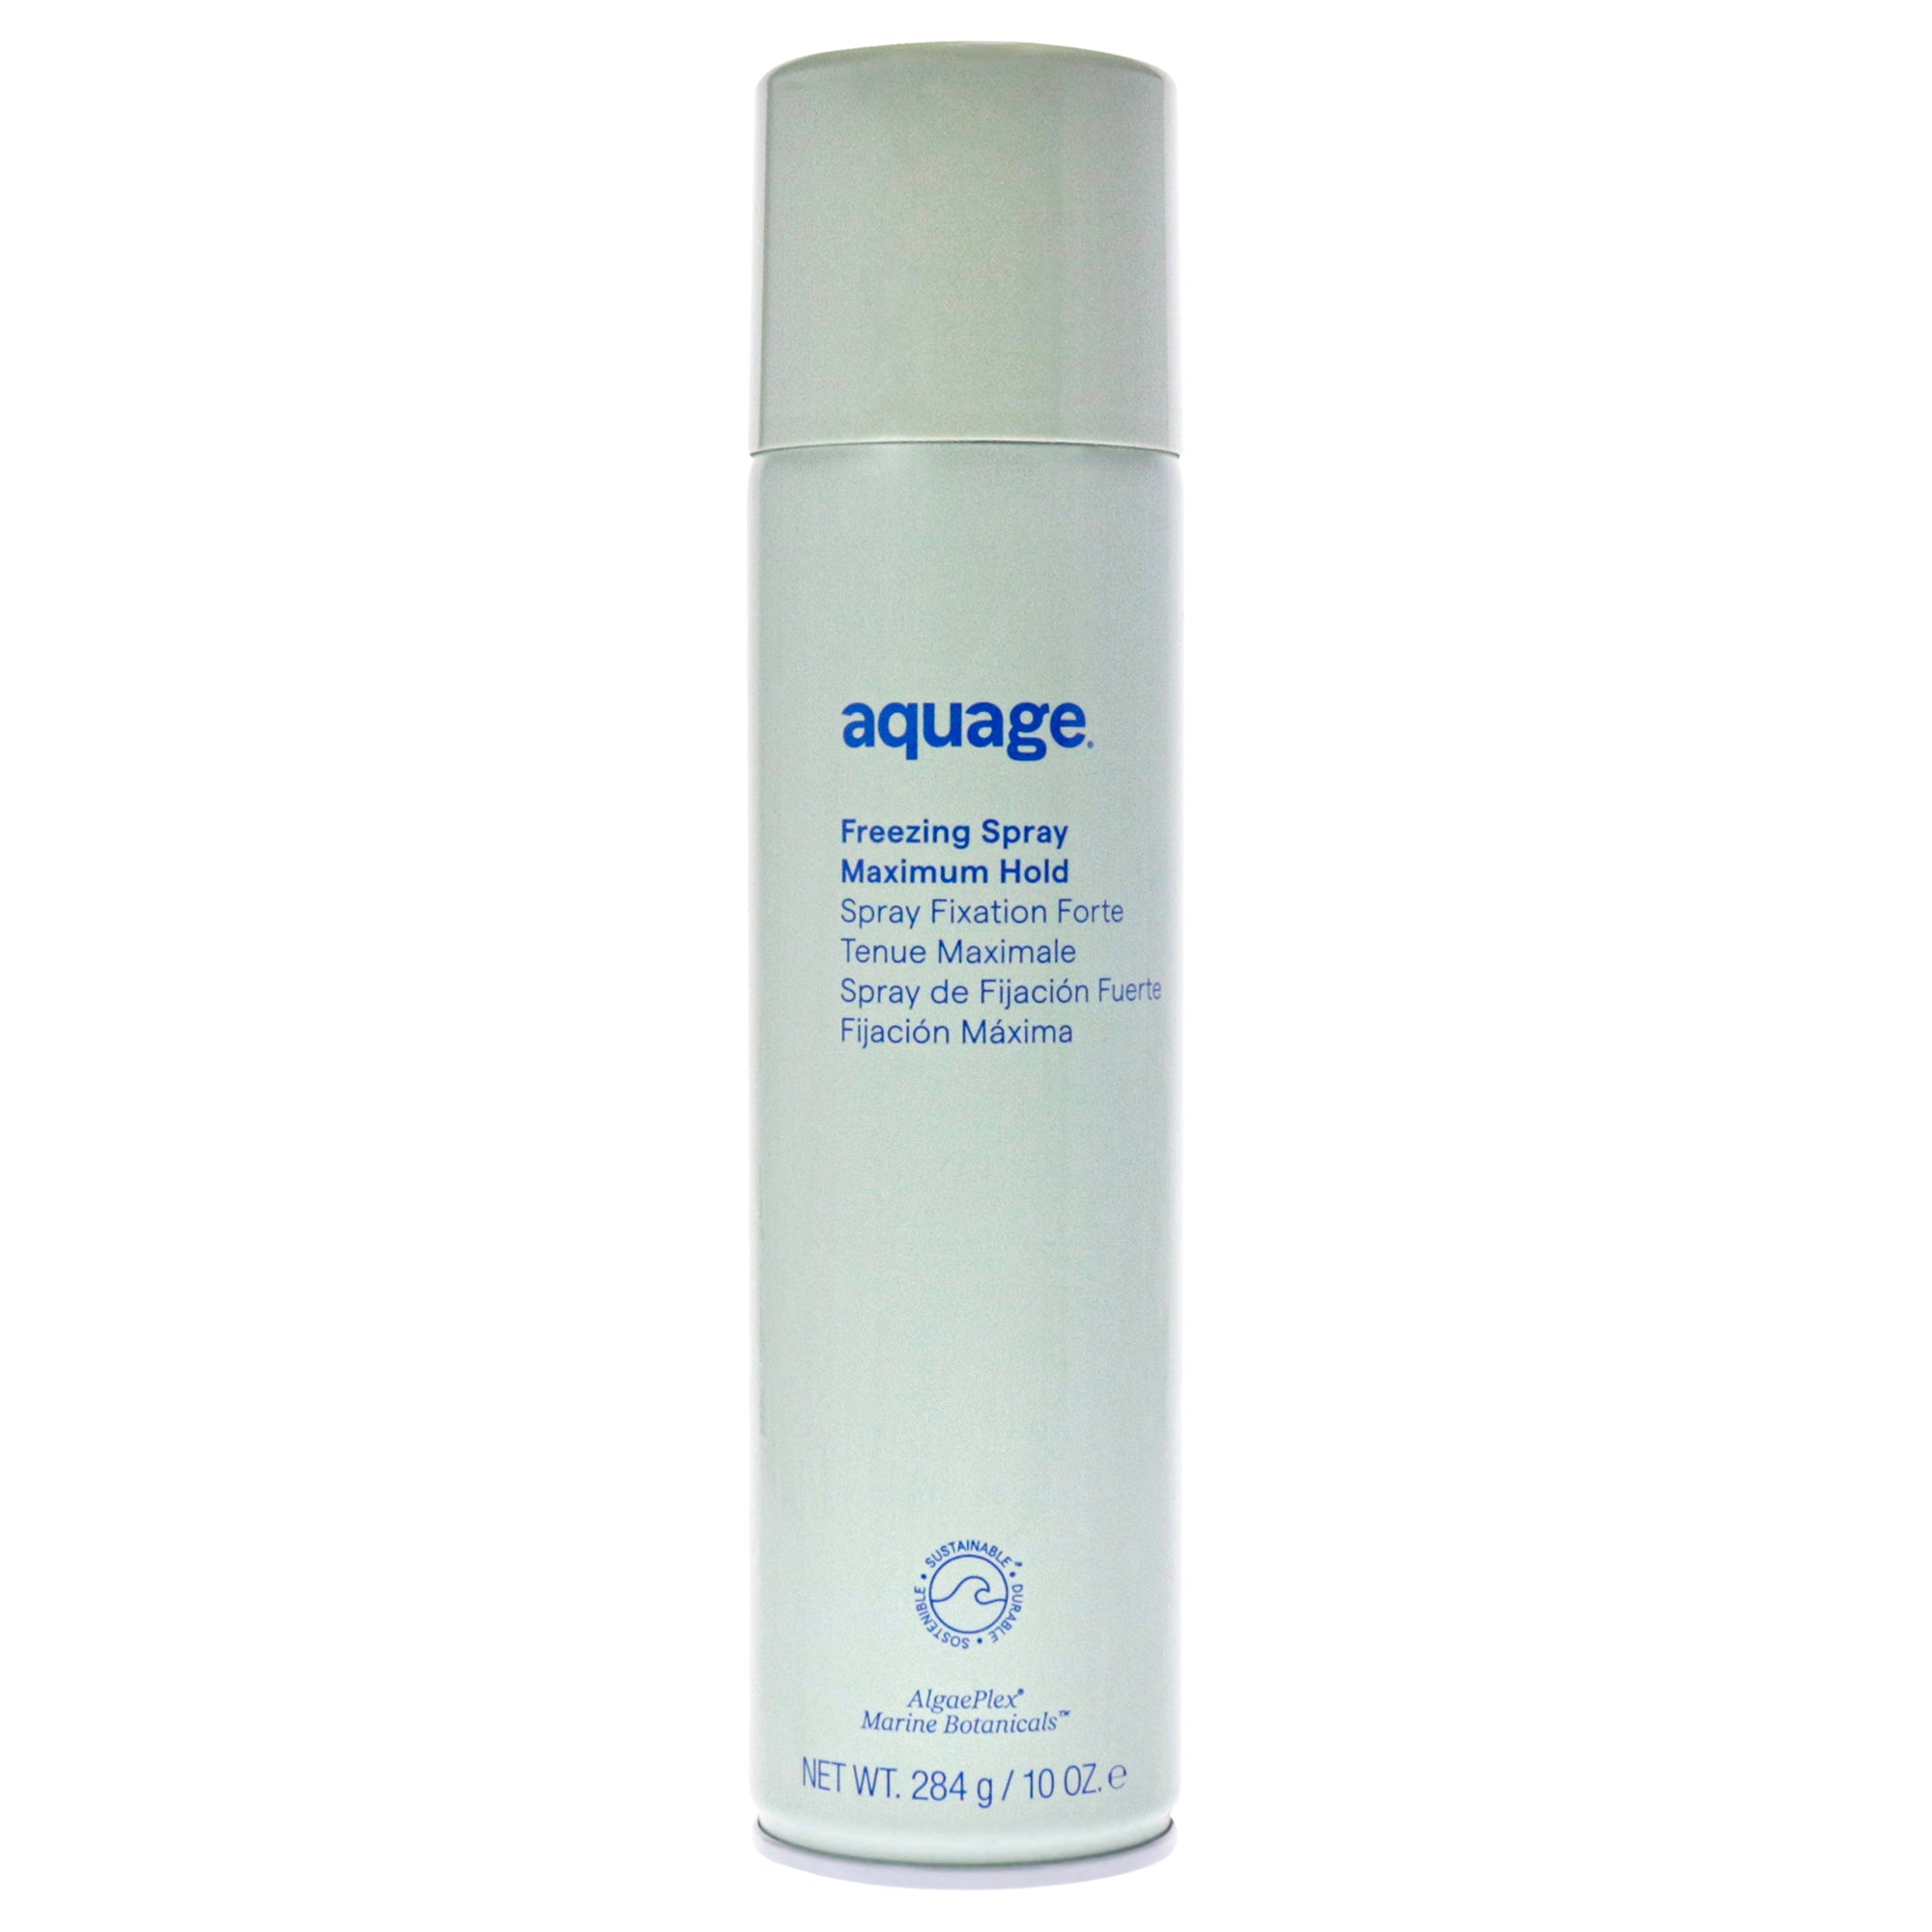 Freezing Spray - Maximum Hold by Aquage for Unisex - 10 oz Hair Spray